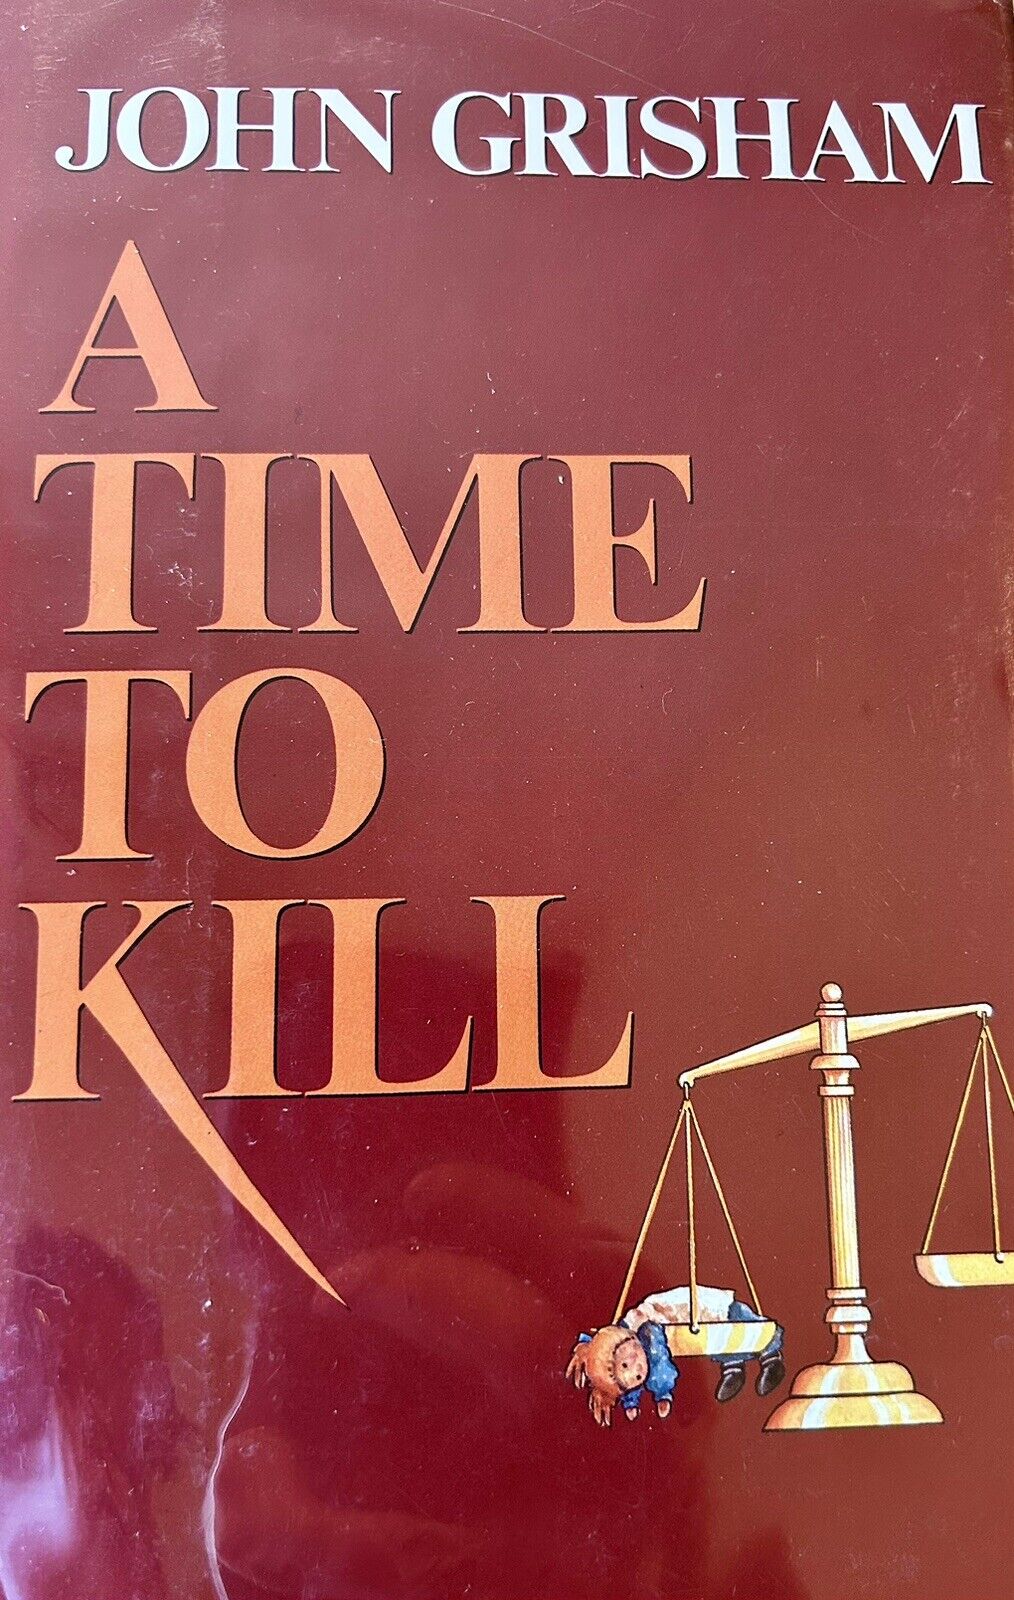 RARE 1989 edition of John Grisham’s “A Time To Kill” by John Grisham